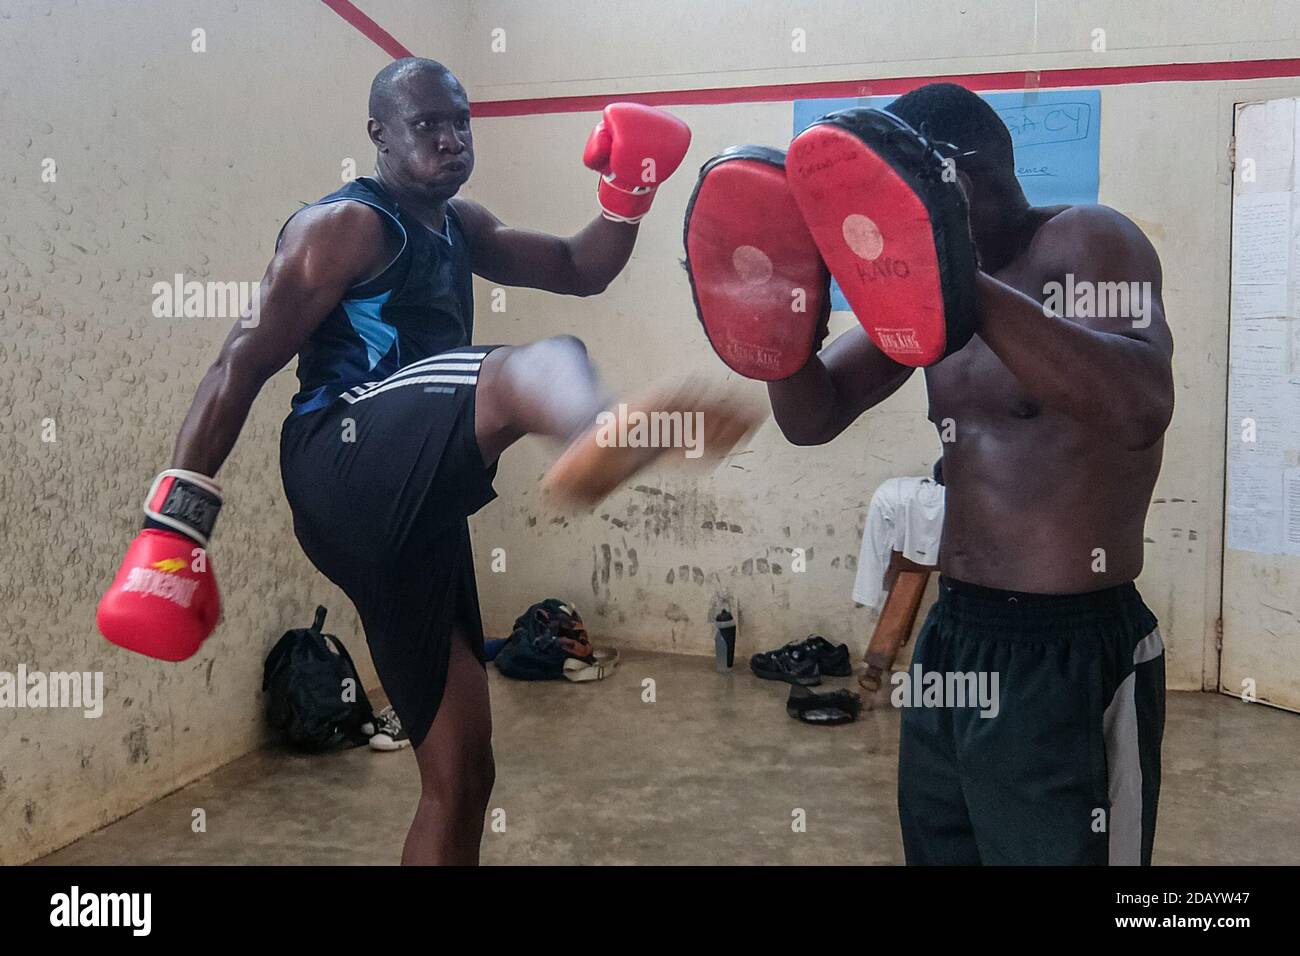 Hannington Mulumba practices kicks during a kick boxing training session with his coach, Kato Isaac, at Makerere University in Kampala, Uganda. Stock Photo